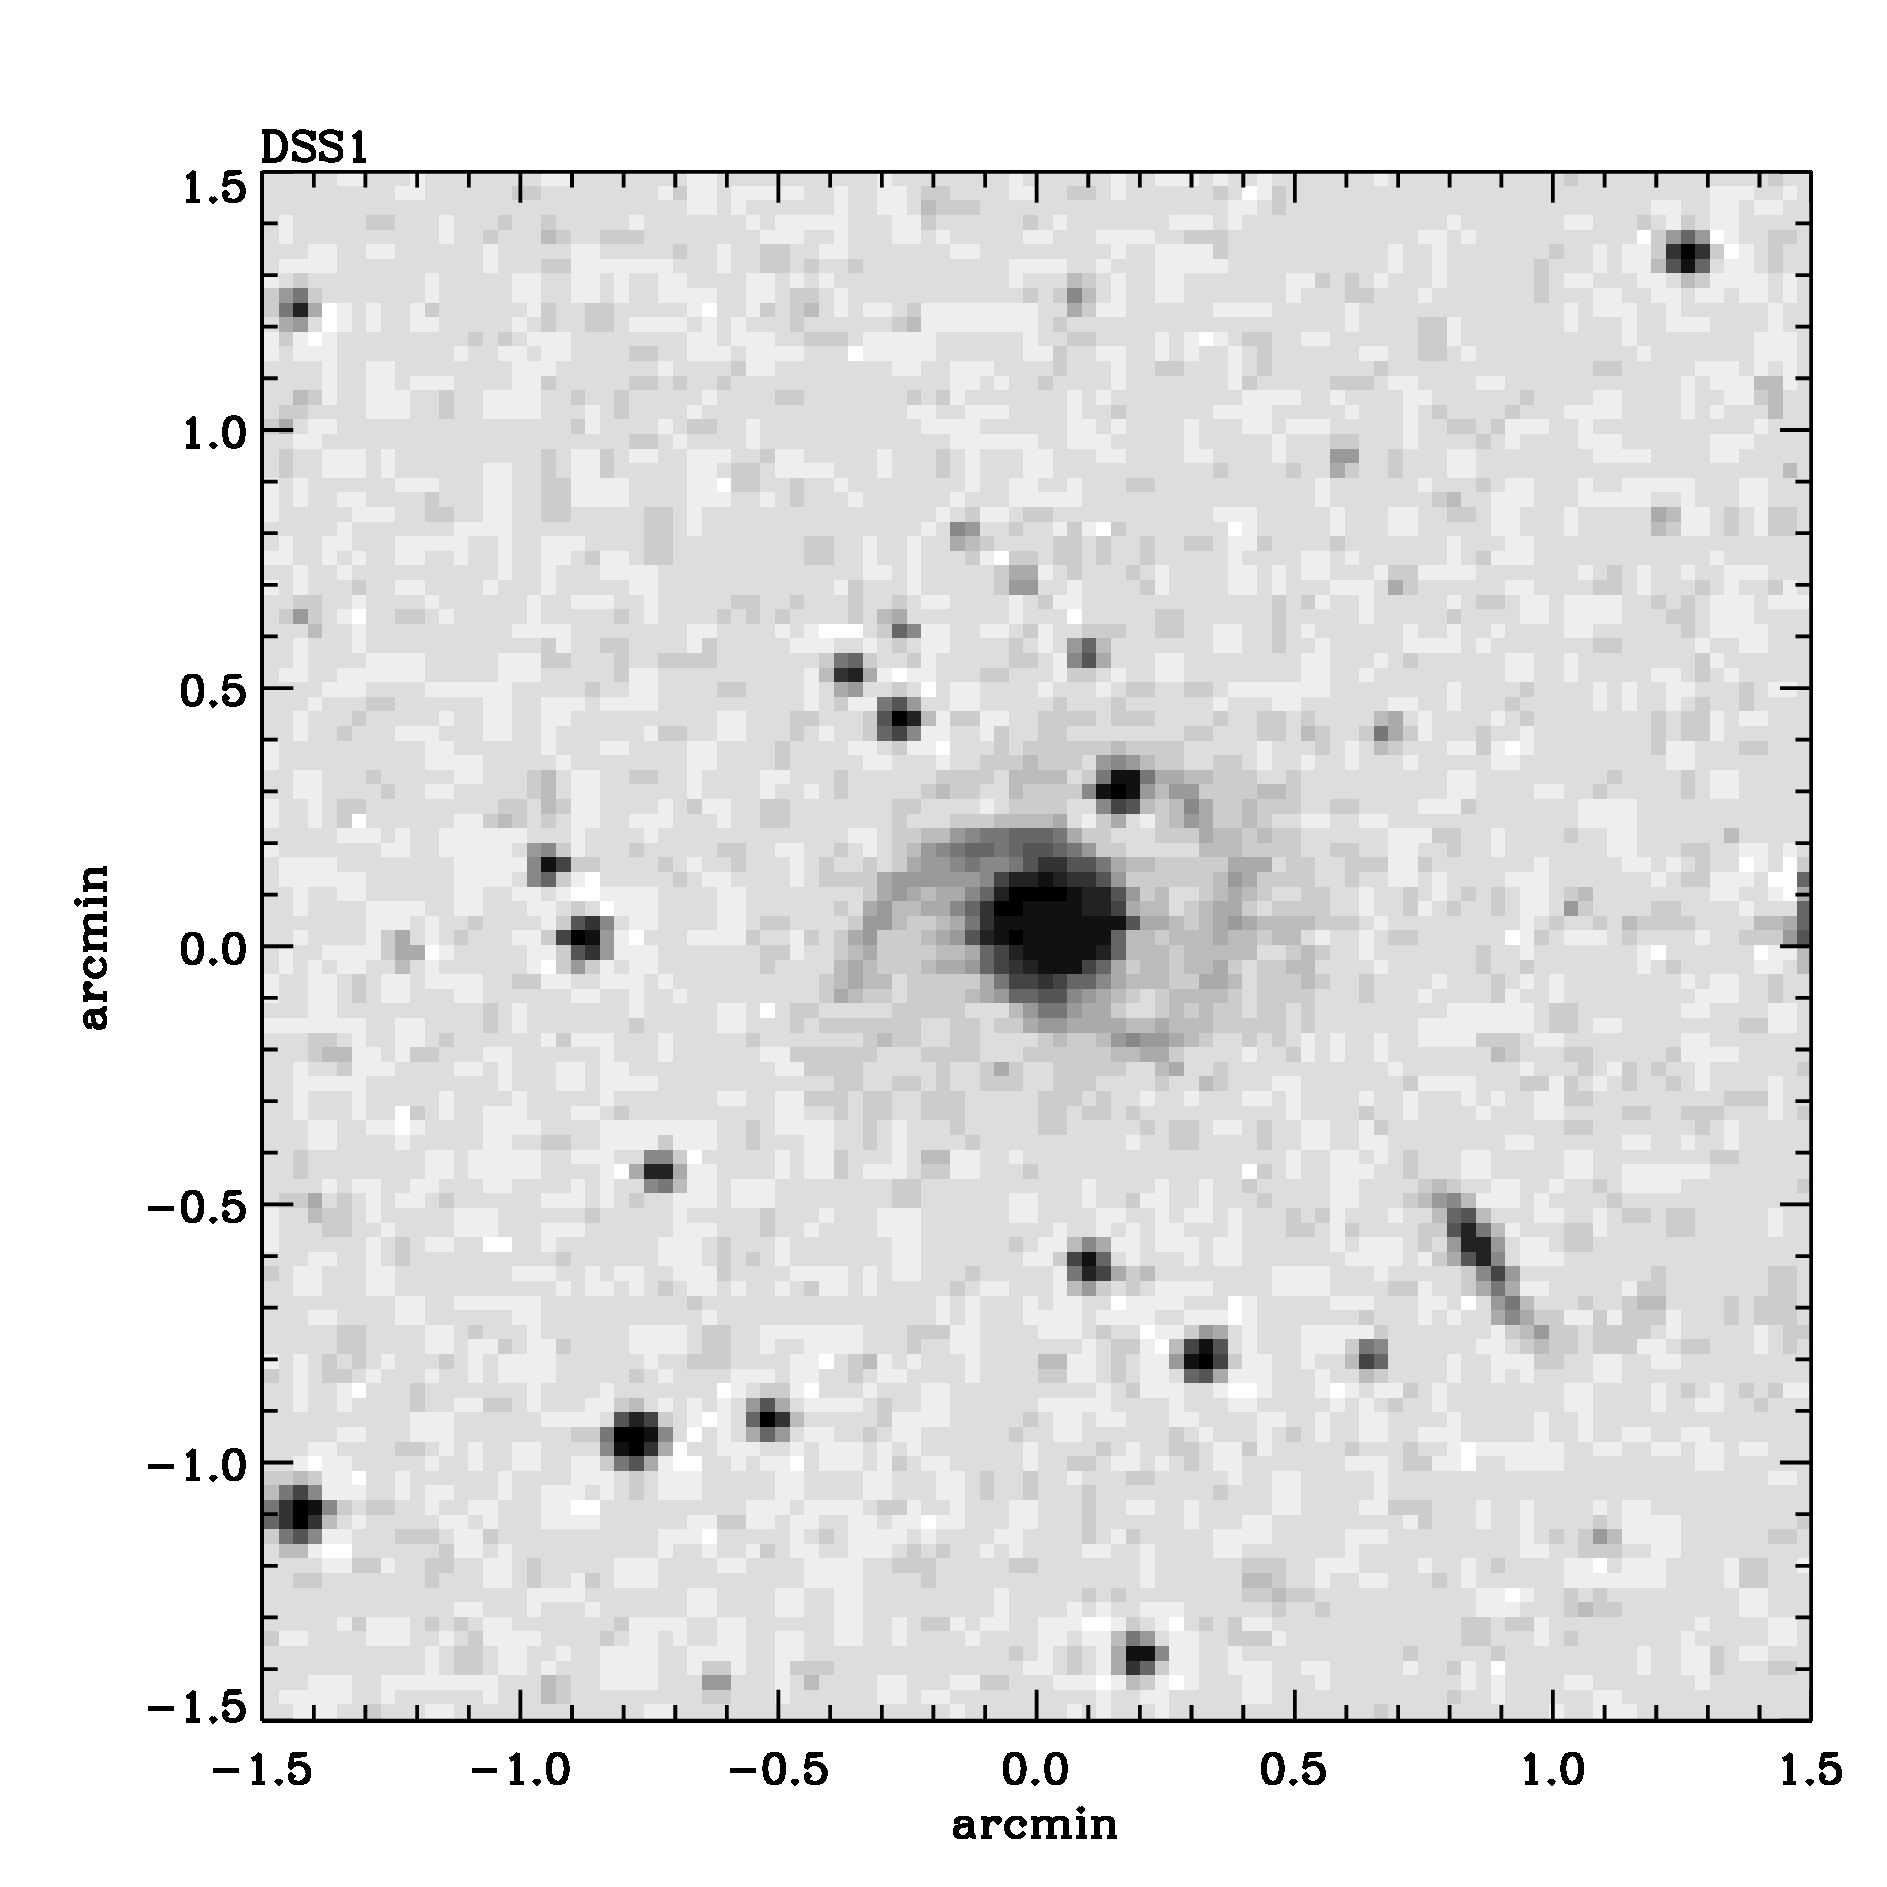 Optical image for SWIFT J1921.1-5842